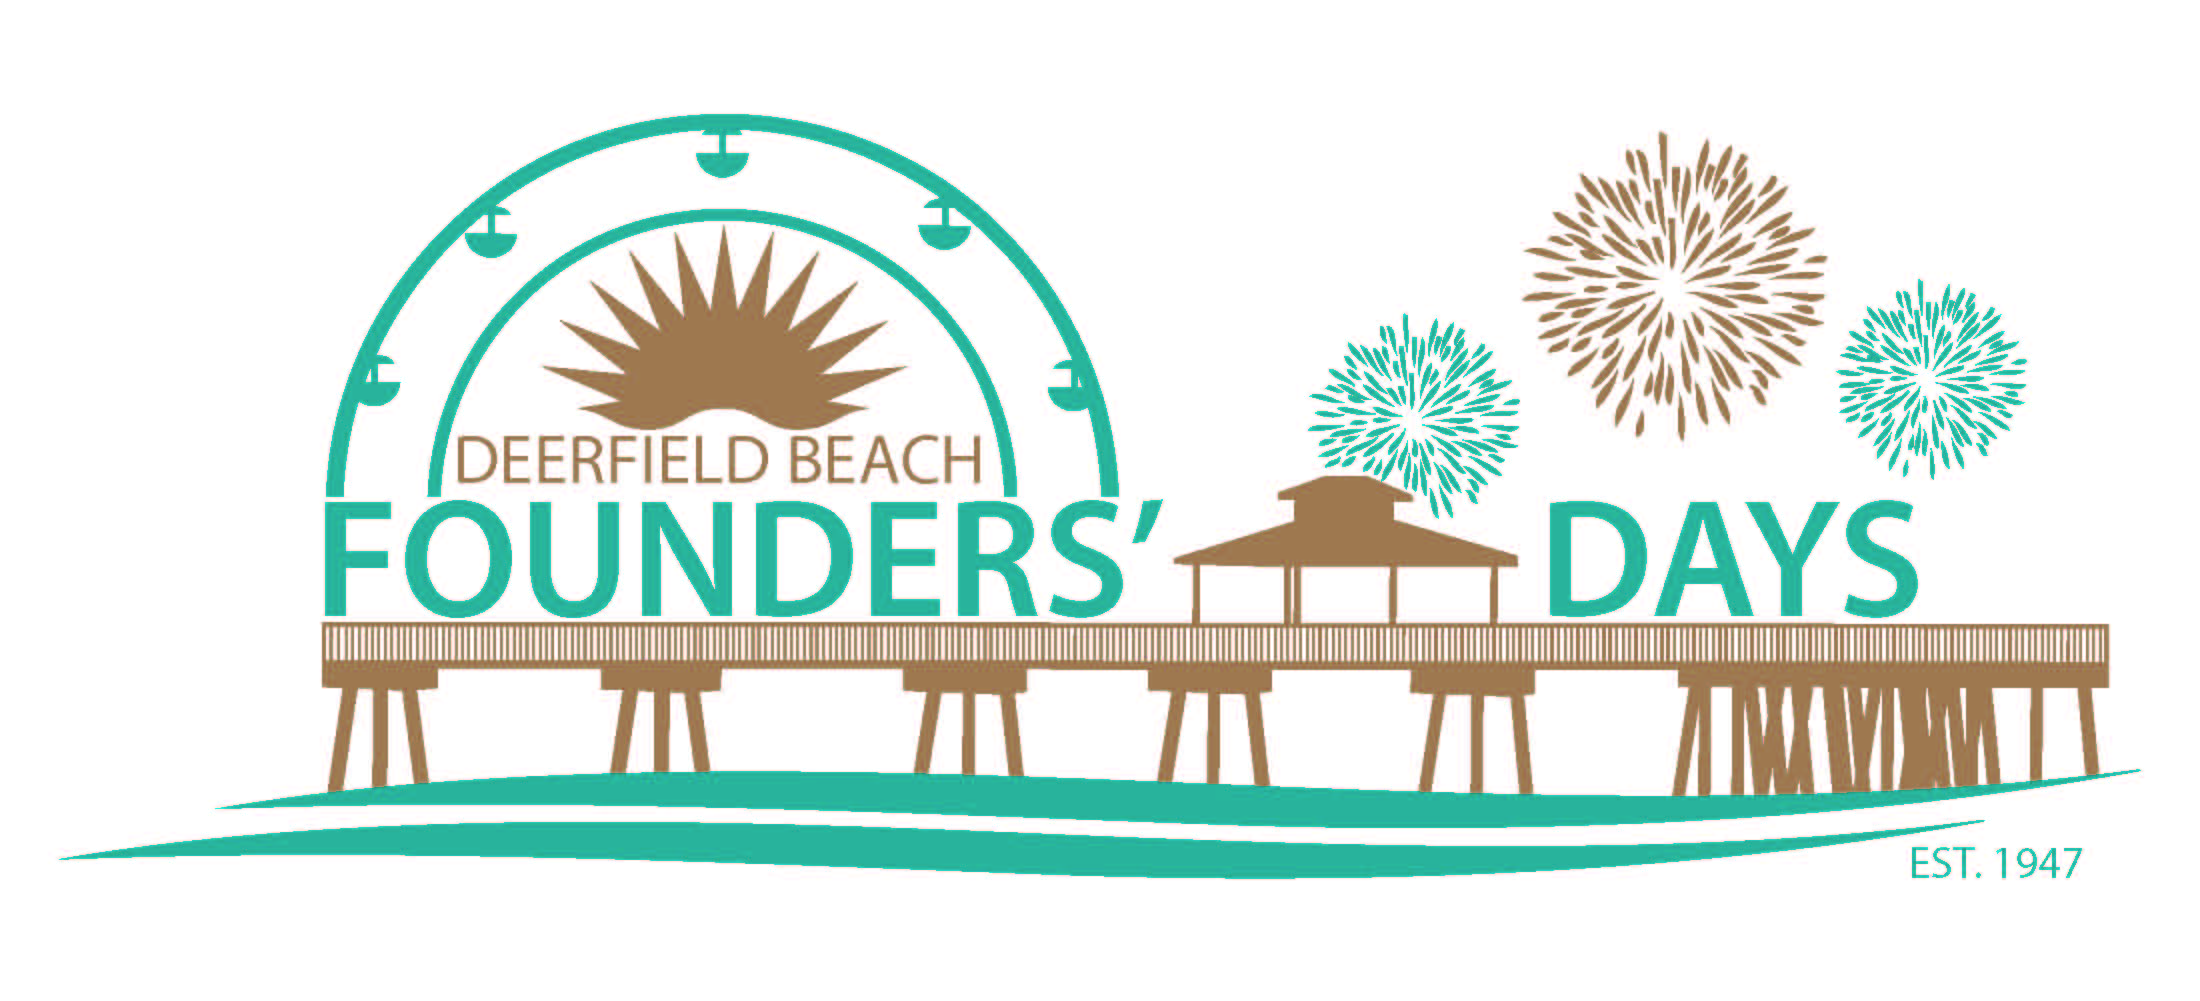 BeachRidesUSA FREE Rides around Deerfield Beach